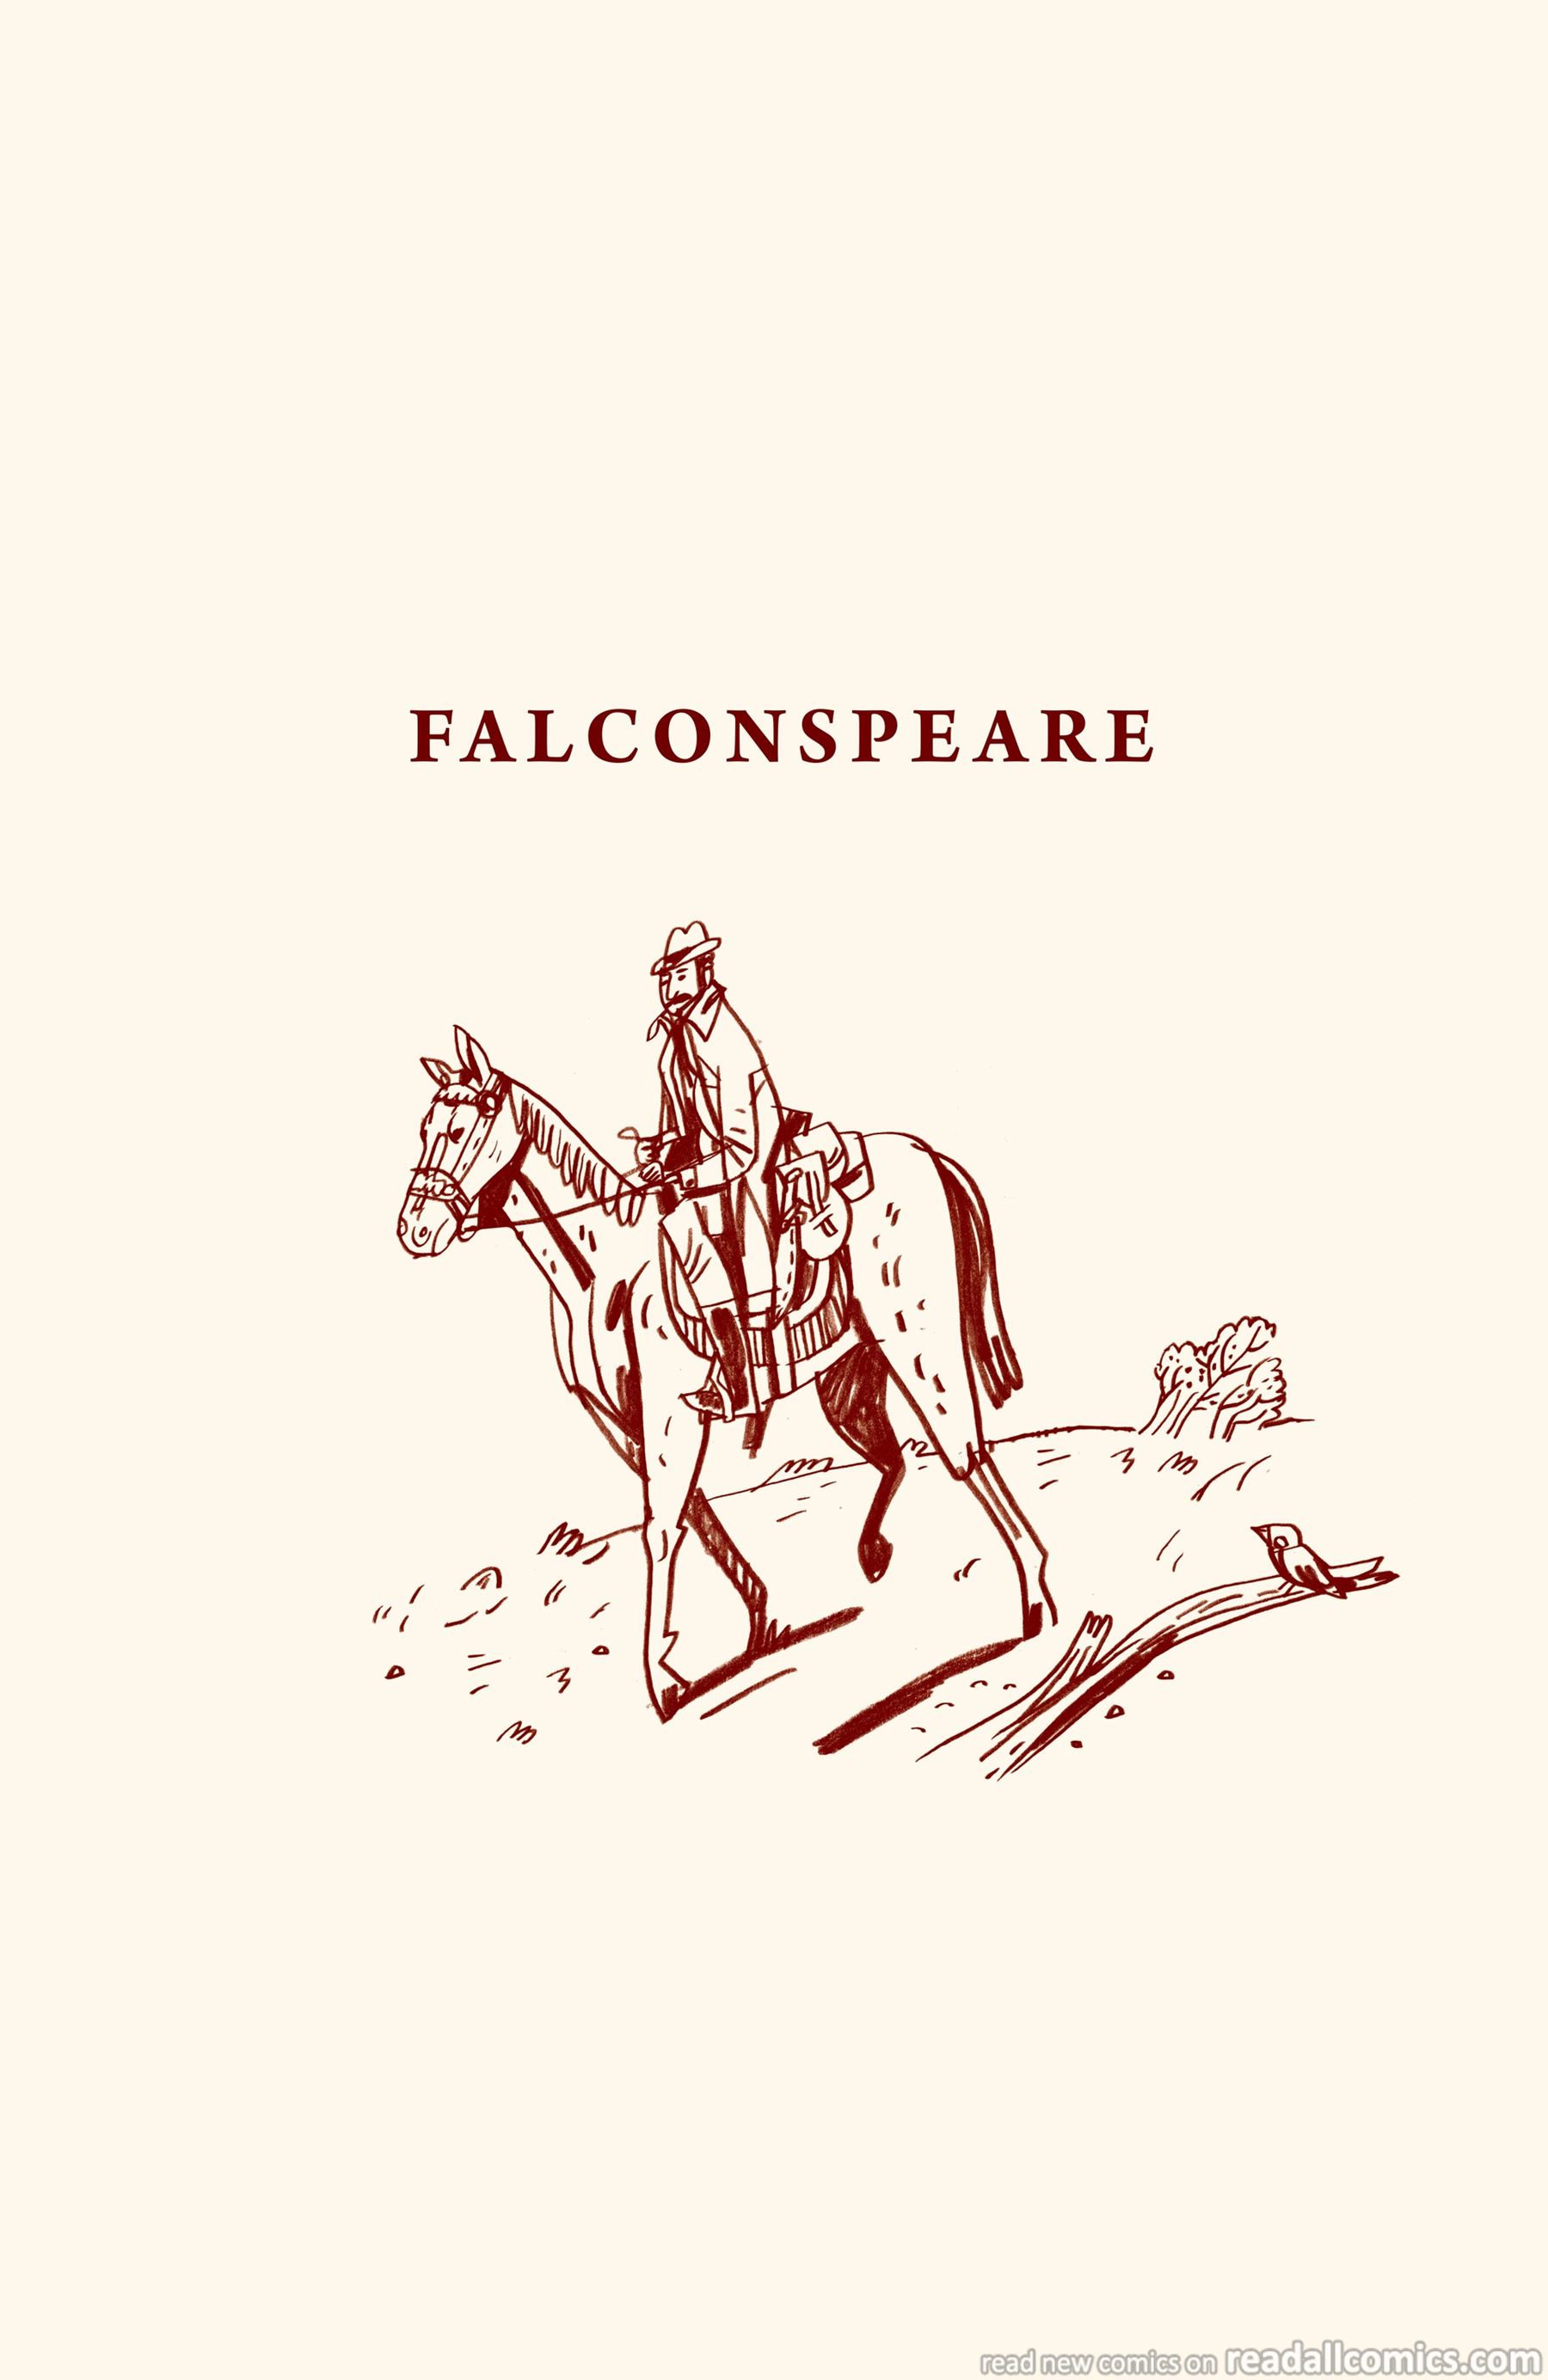 Falconspeare-003